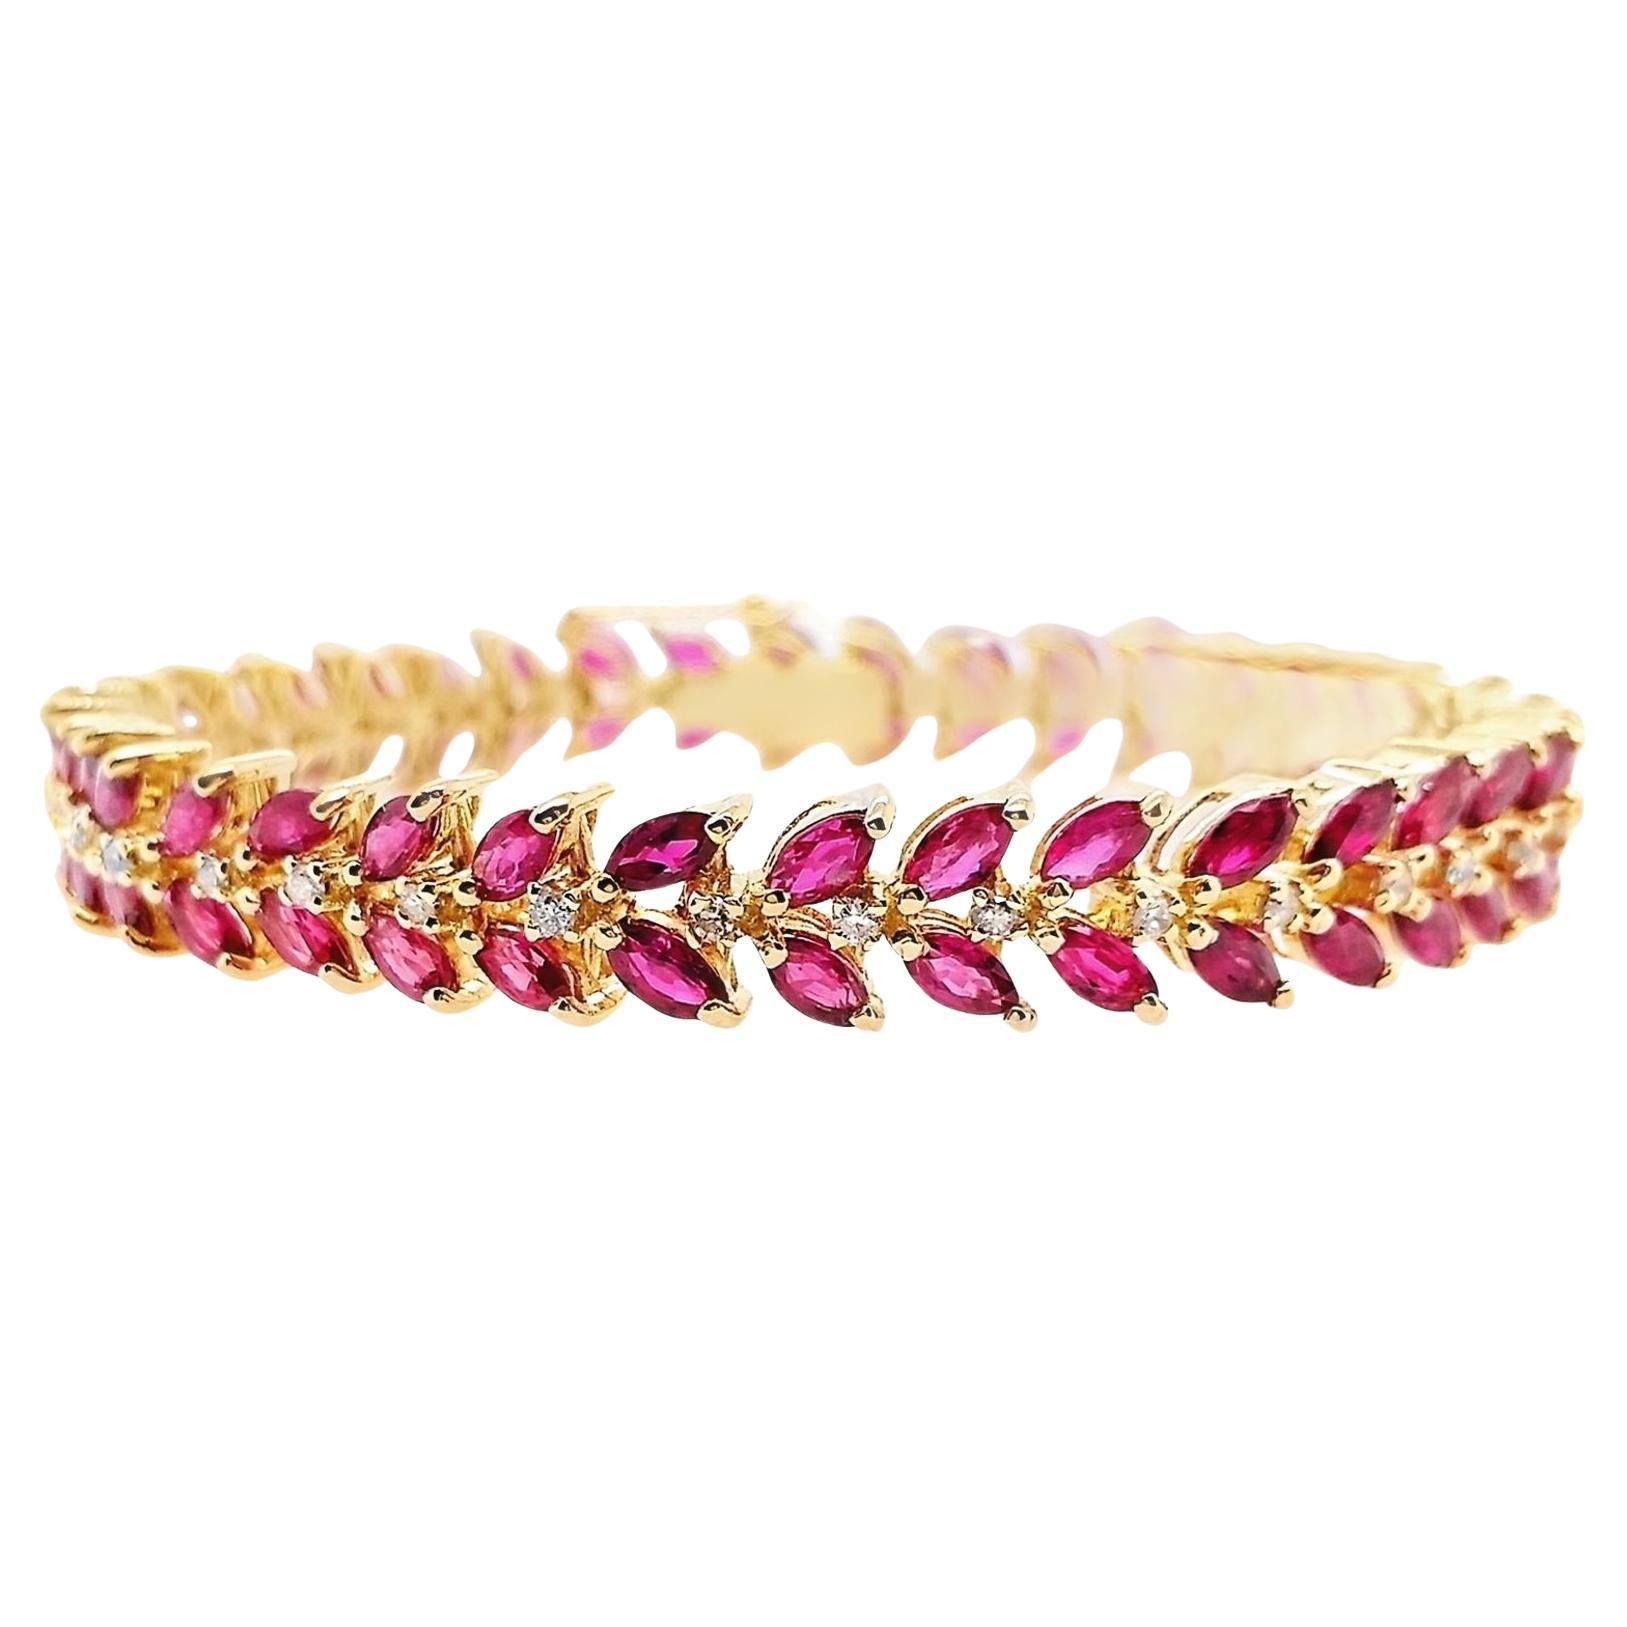 Bracelet en or avec rubis naturel de 7,60 carats et diamants naturels de 0,35 carat certifiés IGI